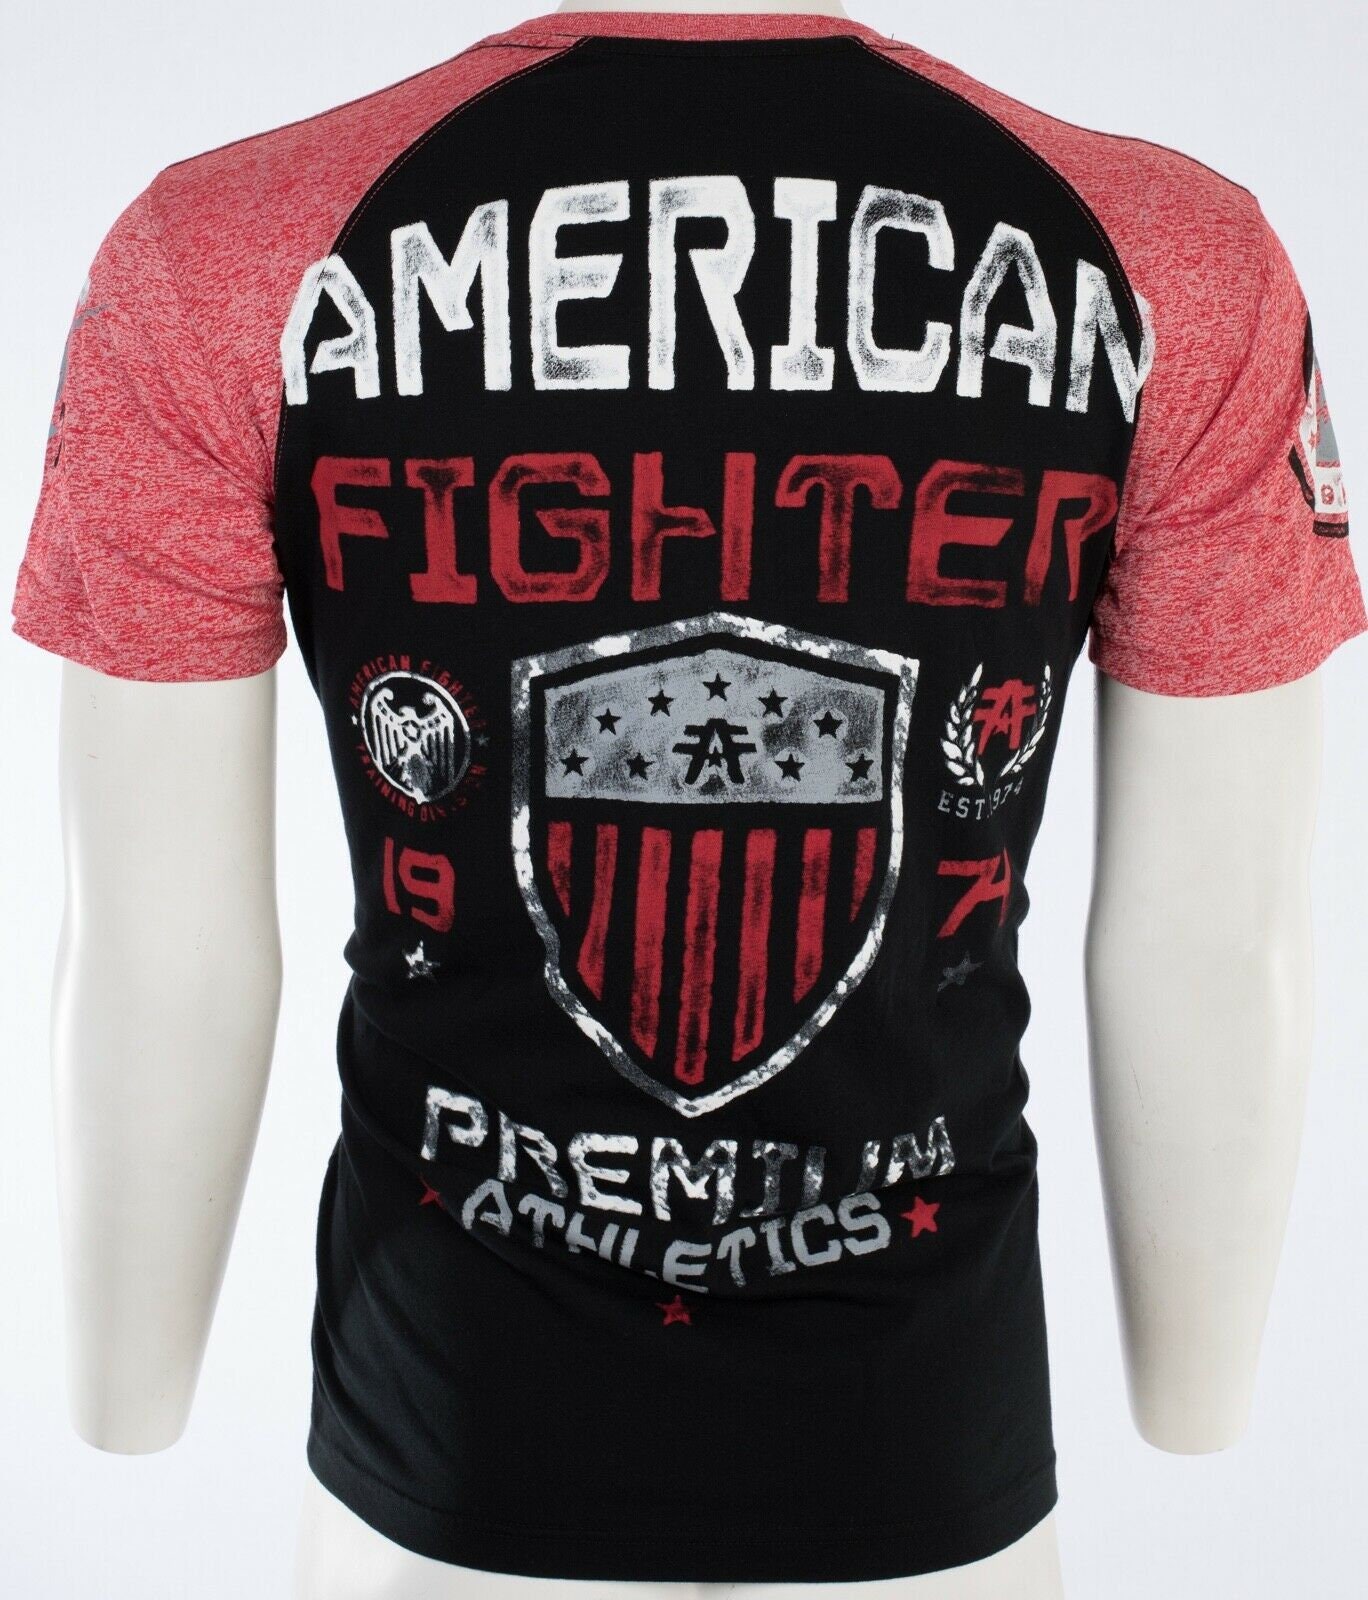 AMERICAN FIGHTER Mens T-shirt Allen Black Red